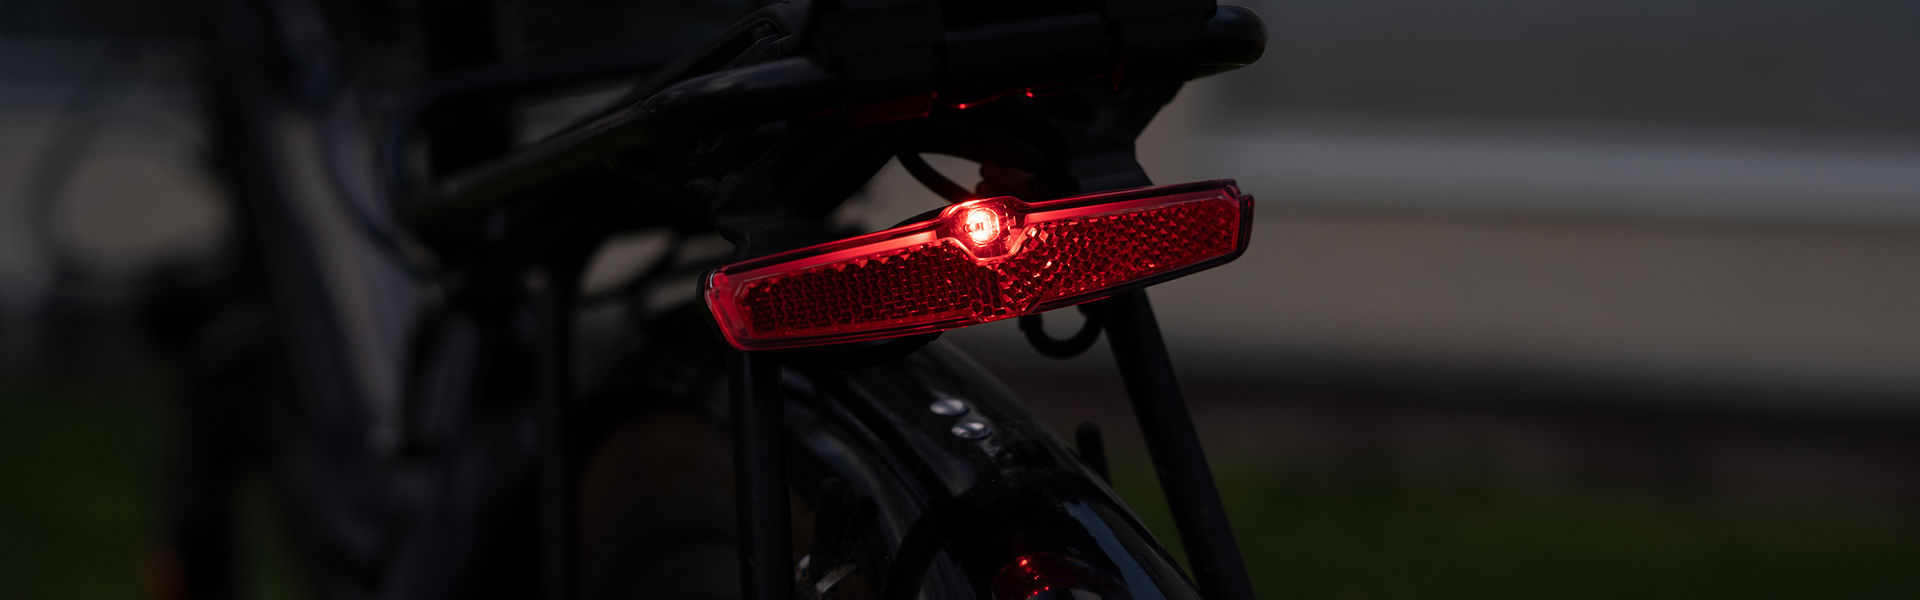 Sate-lite CREE ebike light  StVZO TPRBi eletric bike tail light with Z ECE reflector  mount on Carrier 6-48V